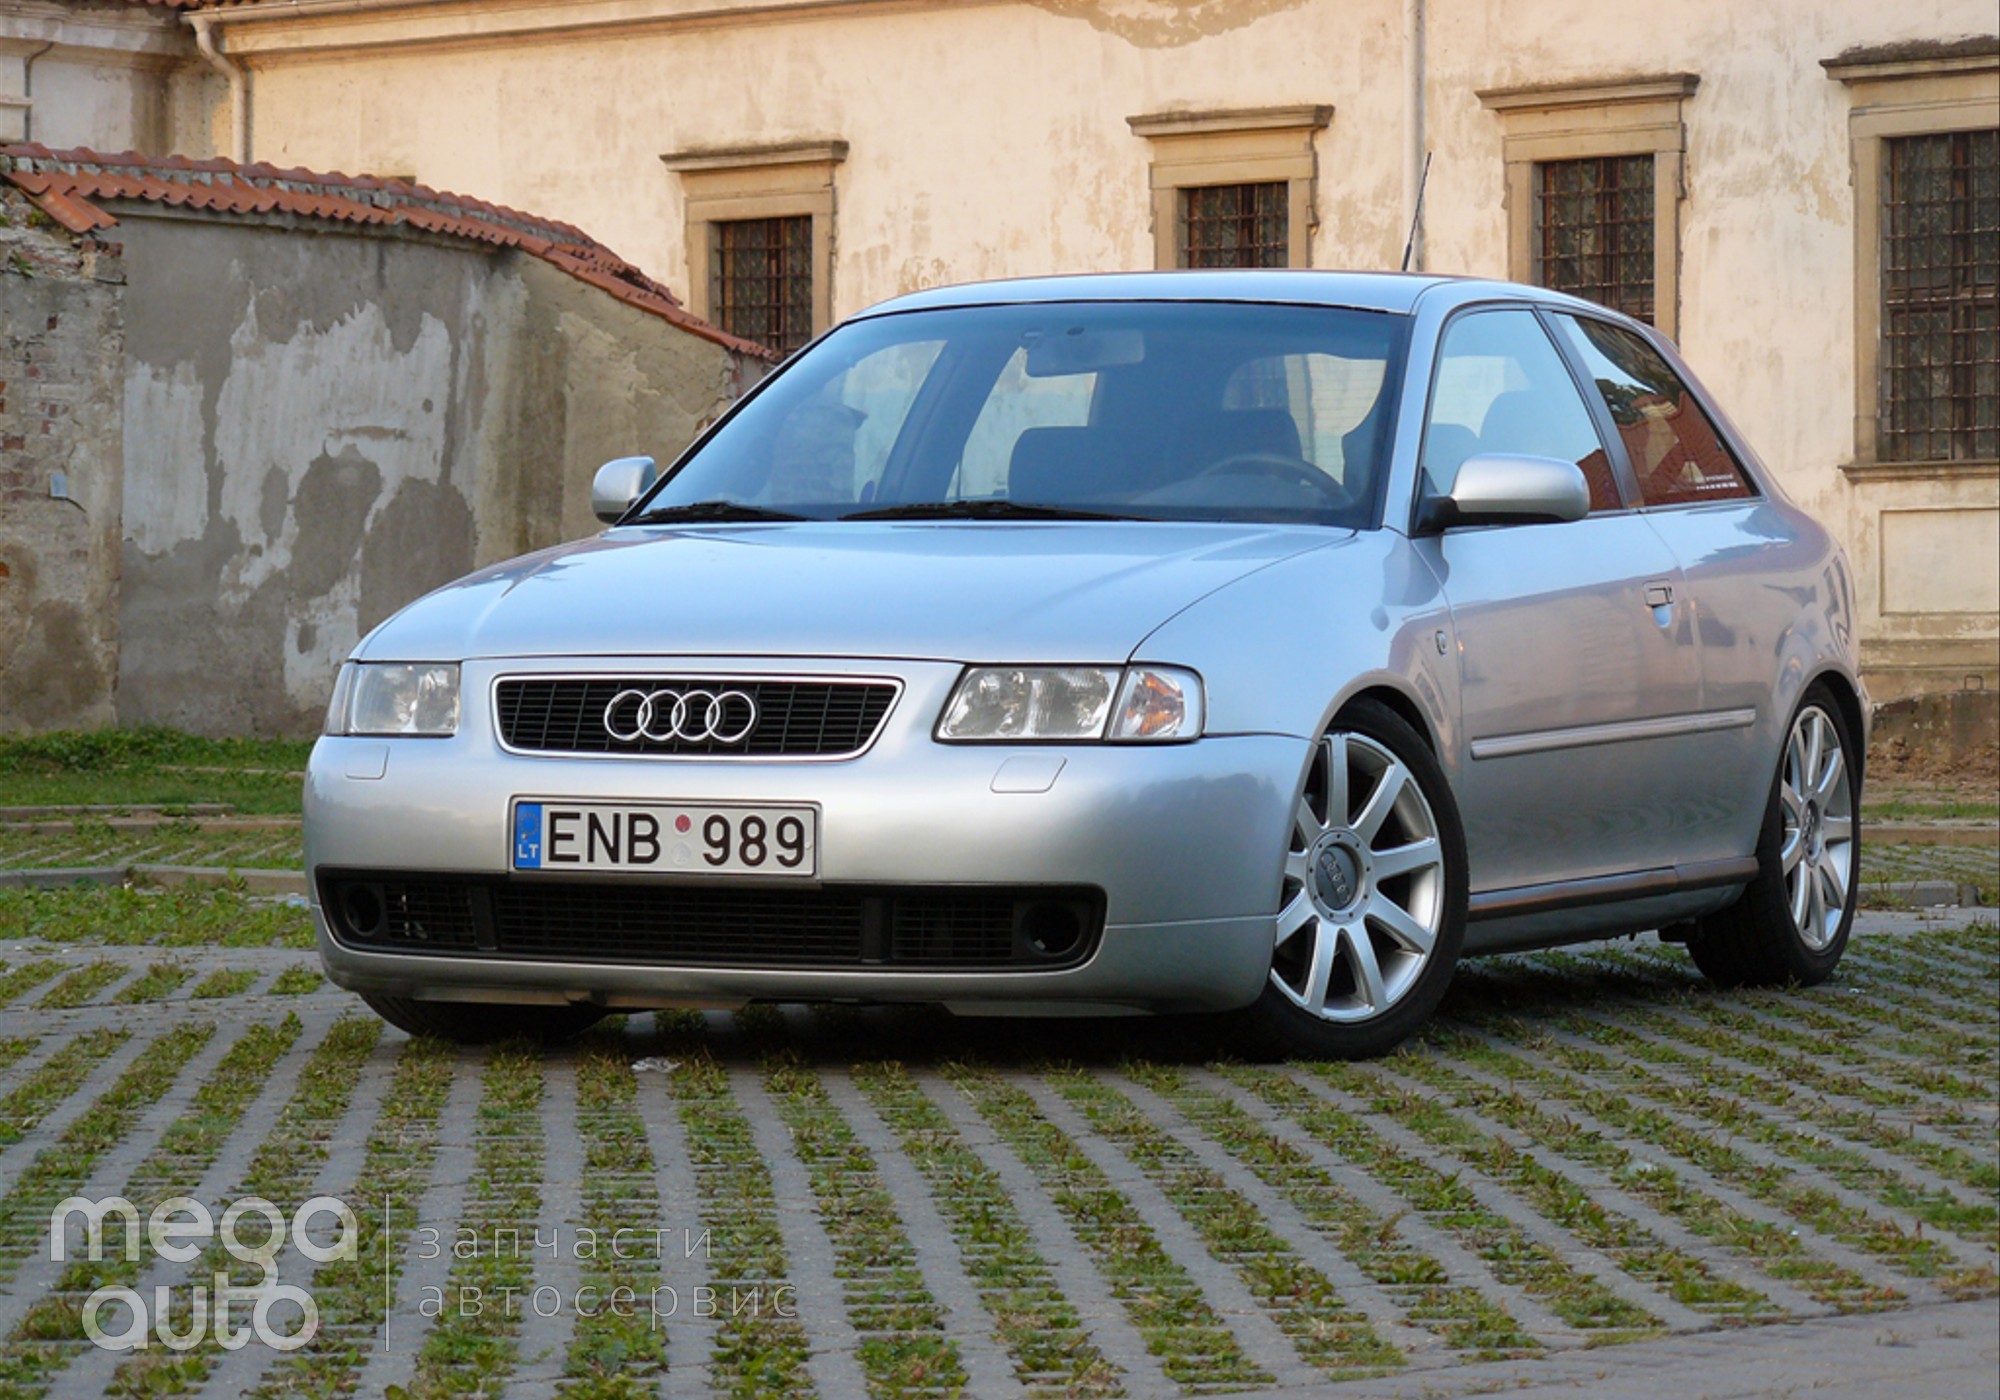 Audi A3 8L 1998 г. в разборе